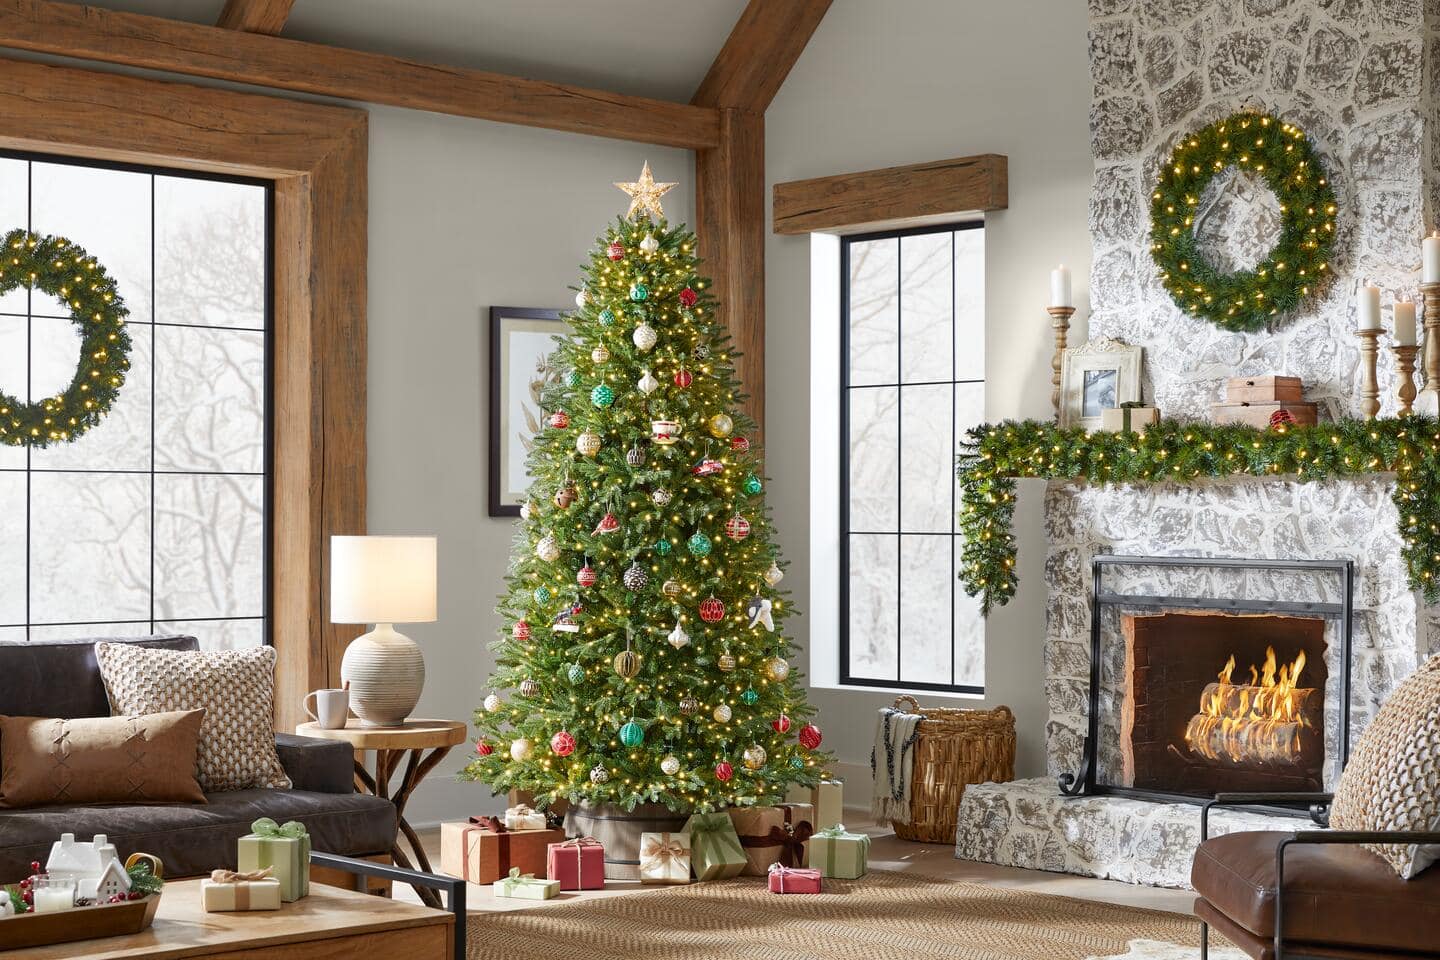 Seasonal Hand painted Wood Ornaments Set Of 4 Christmas Decor Home Decor